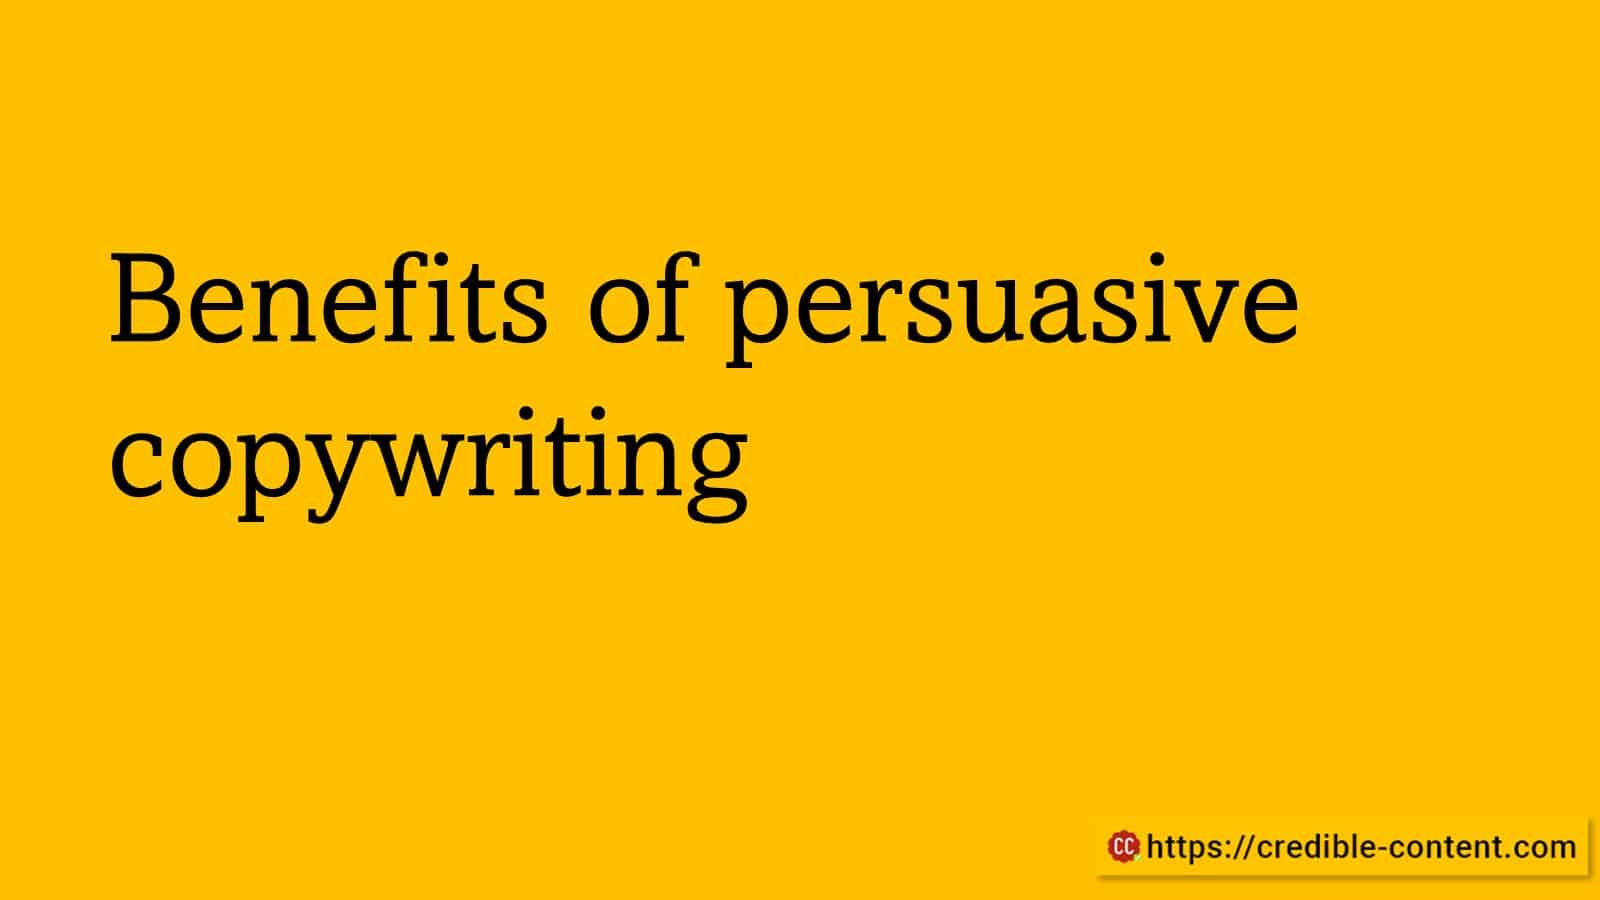 Benefits of persuasive copywriting